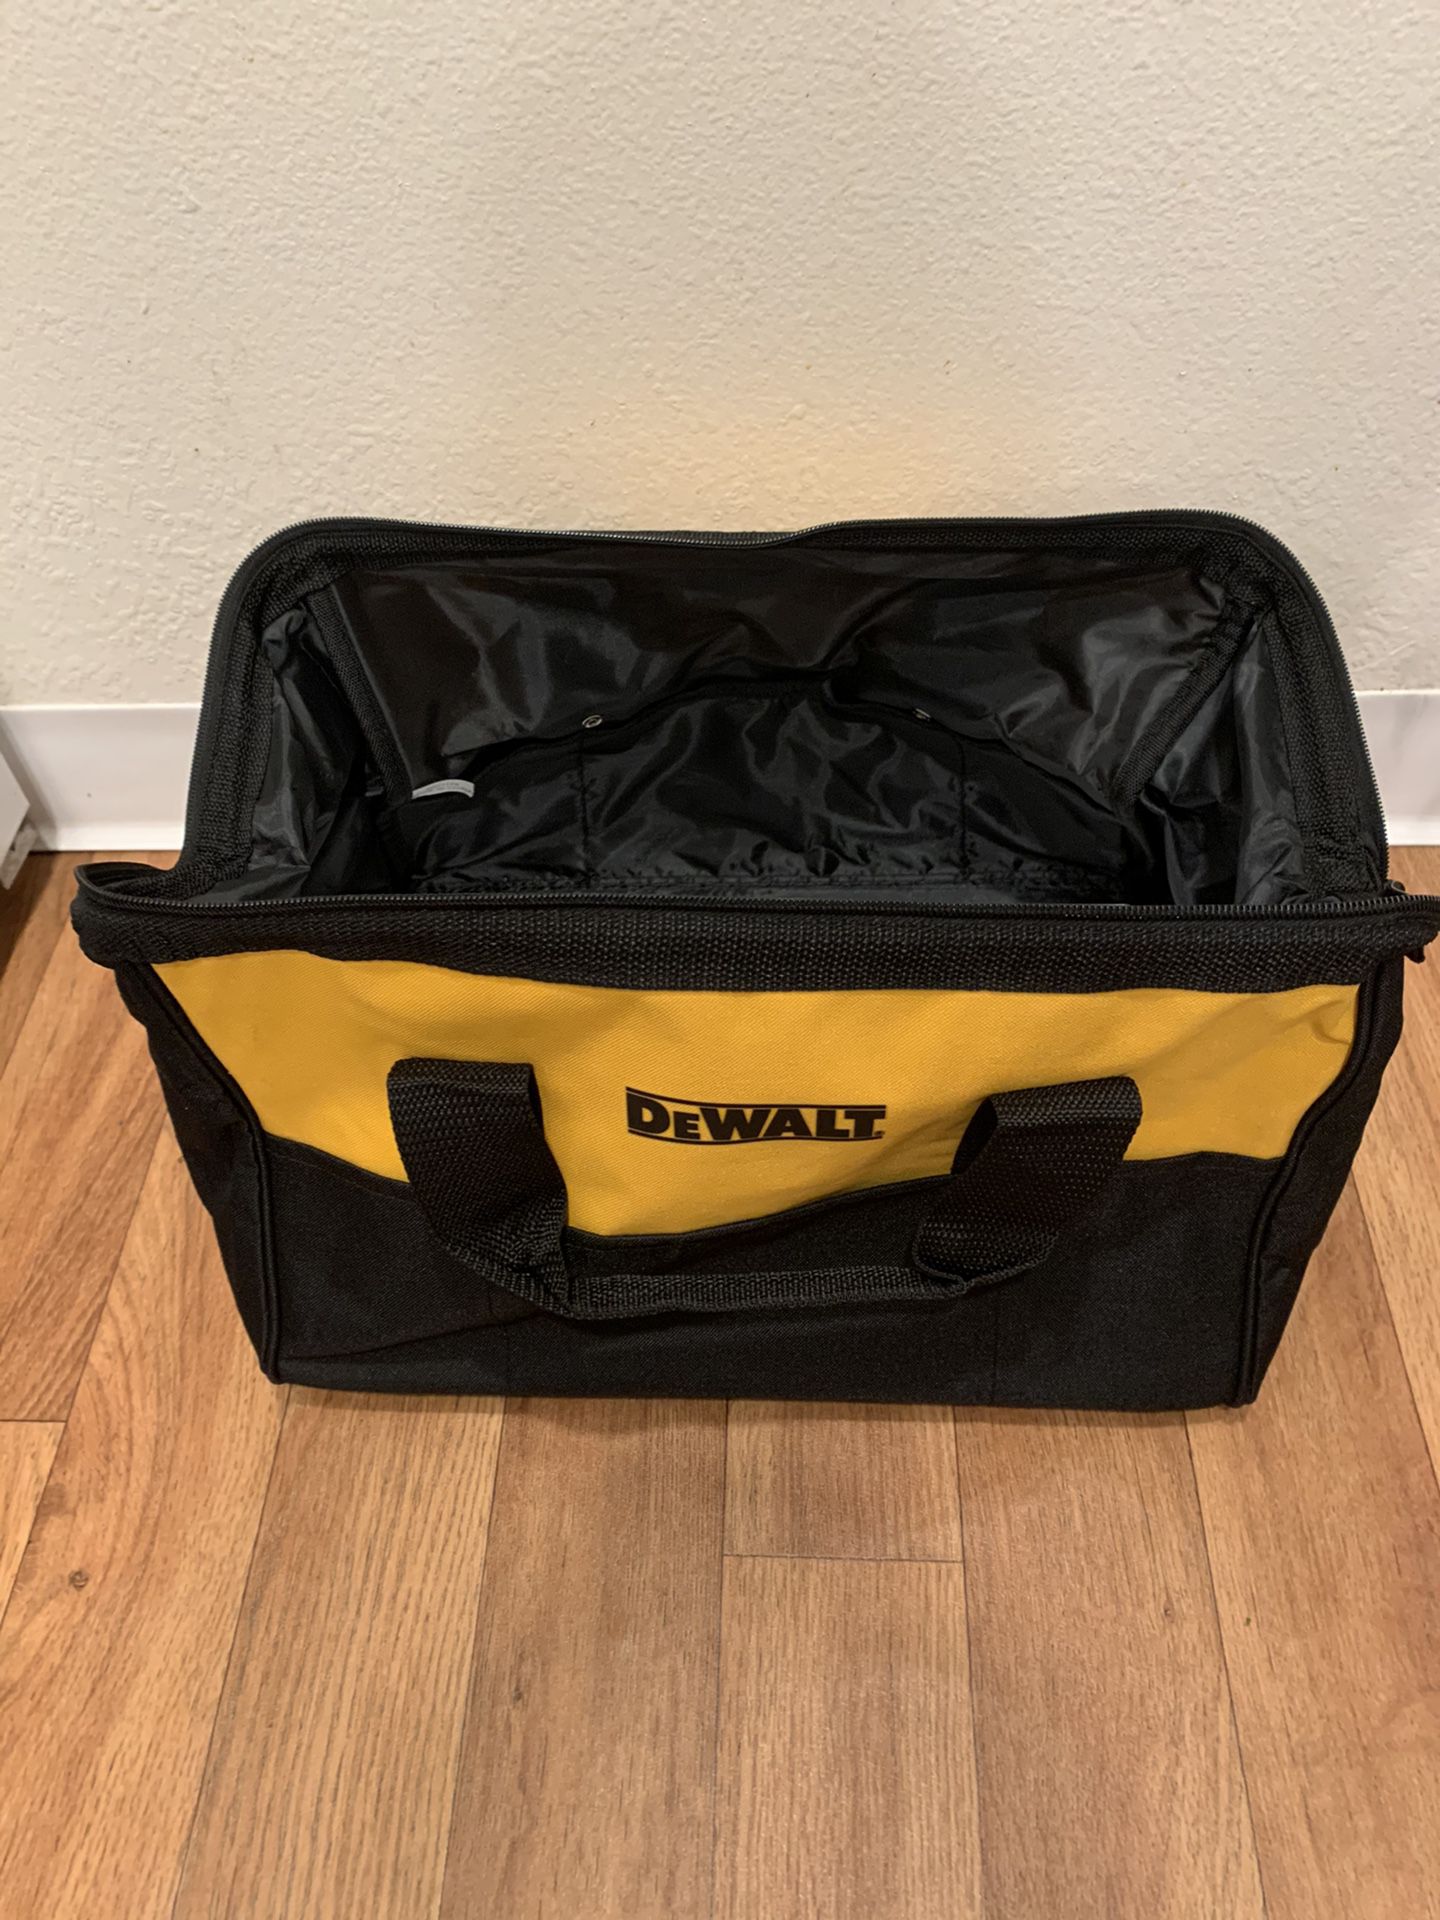 Dewalt tool bag. Medium size. $20 firm on price